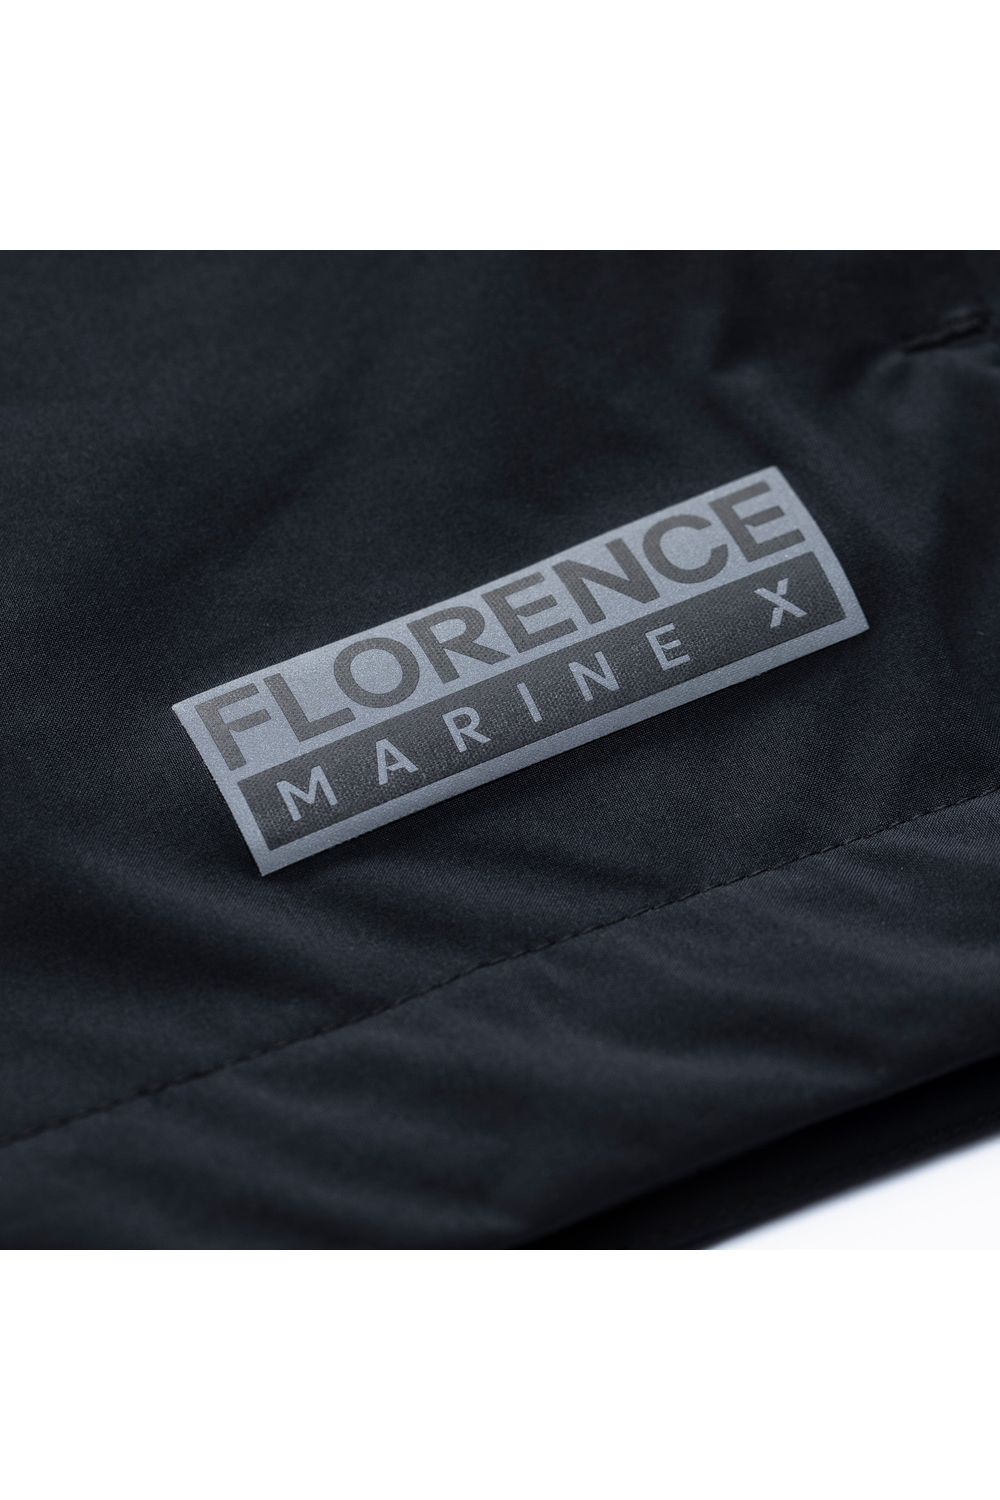 Florence Marine X Rain Pro 2.5 Layer Waterproof Shell Black